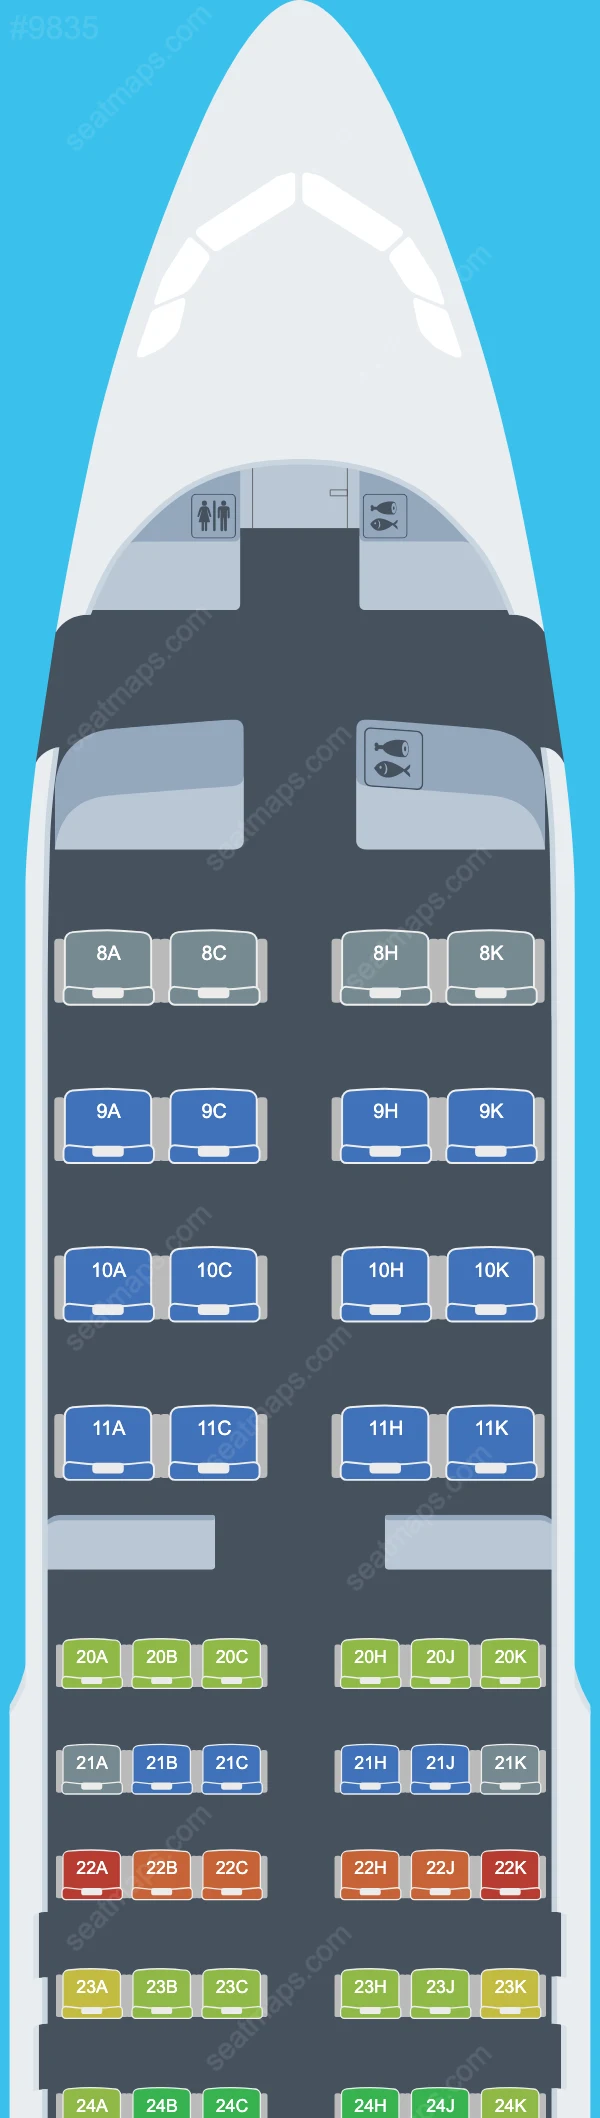 Egyptair Airbus A320 Seat Maps A320-200neo